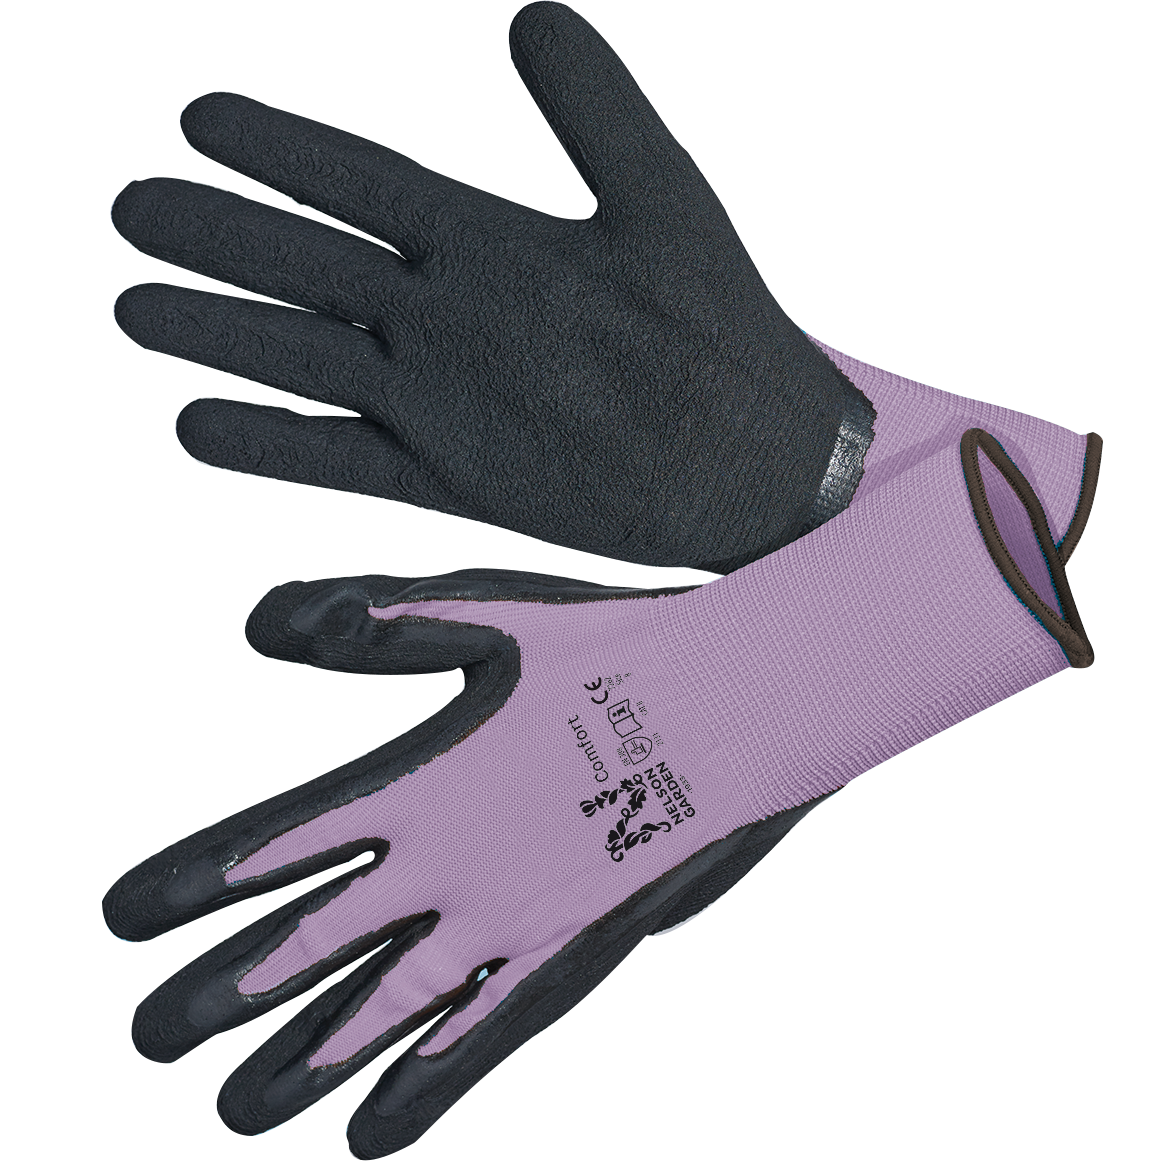 handske-comfort-violett-svart-stl-9-1